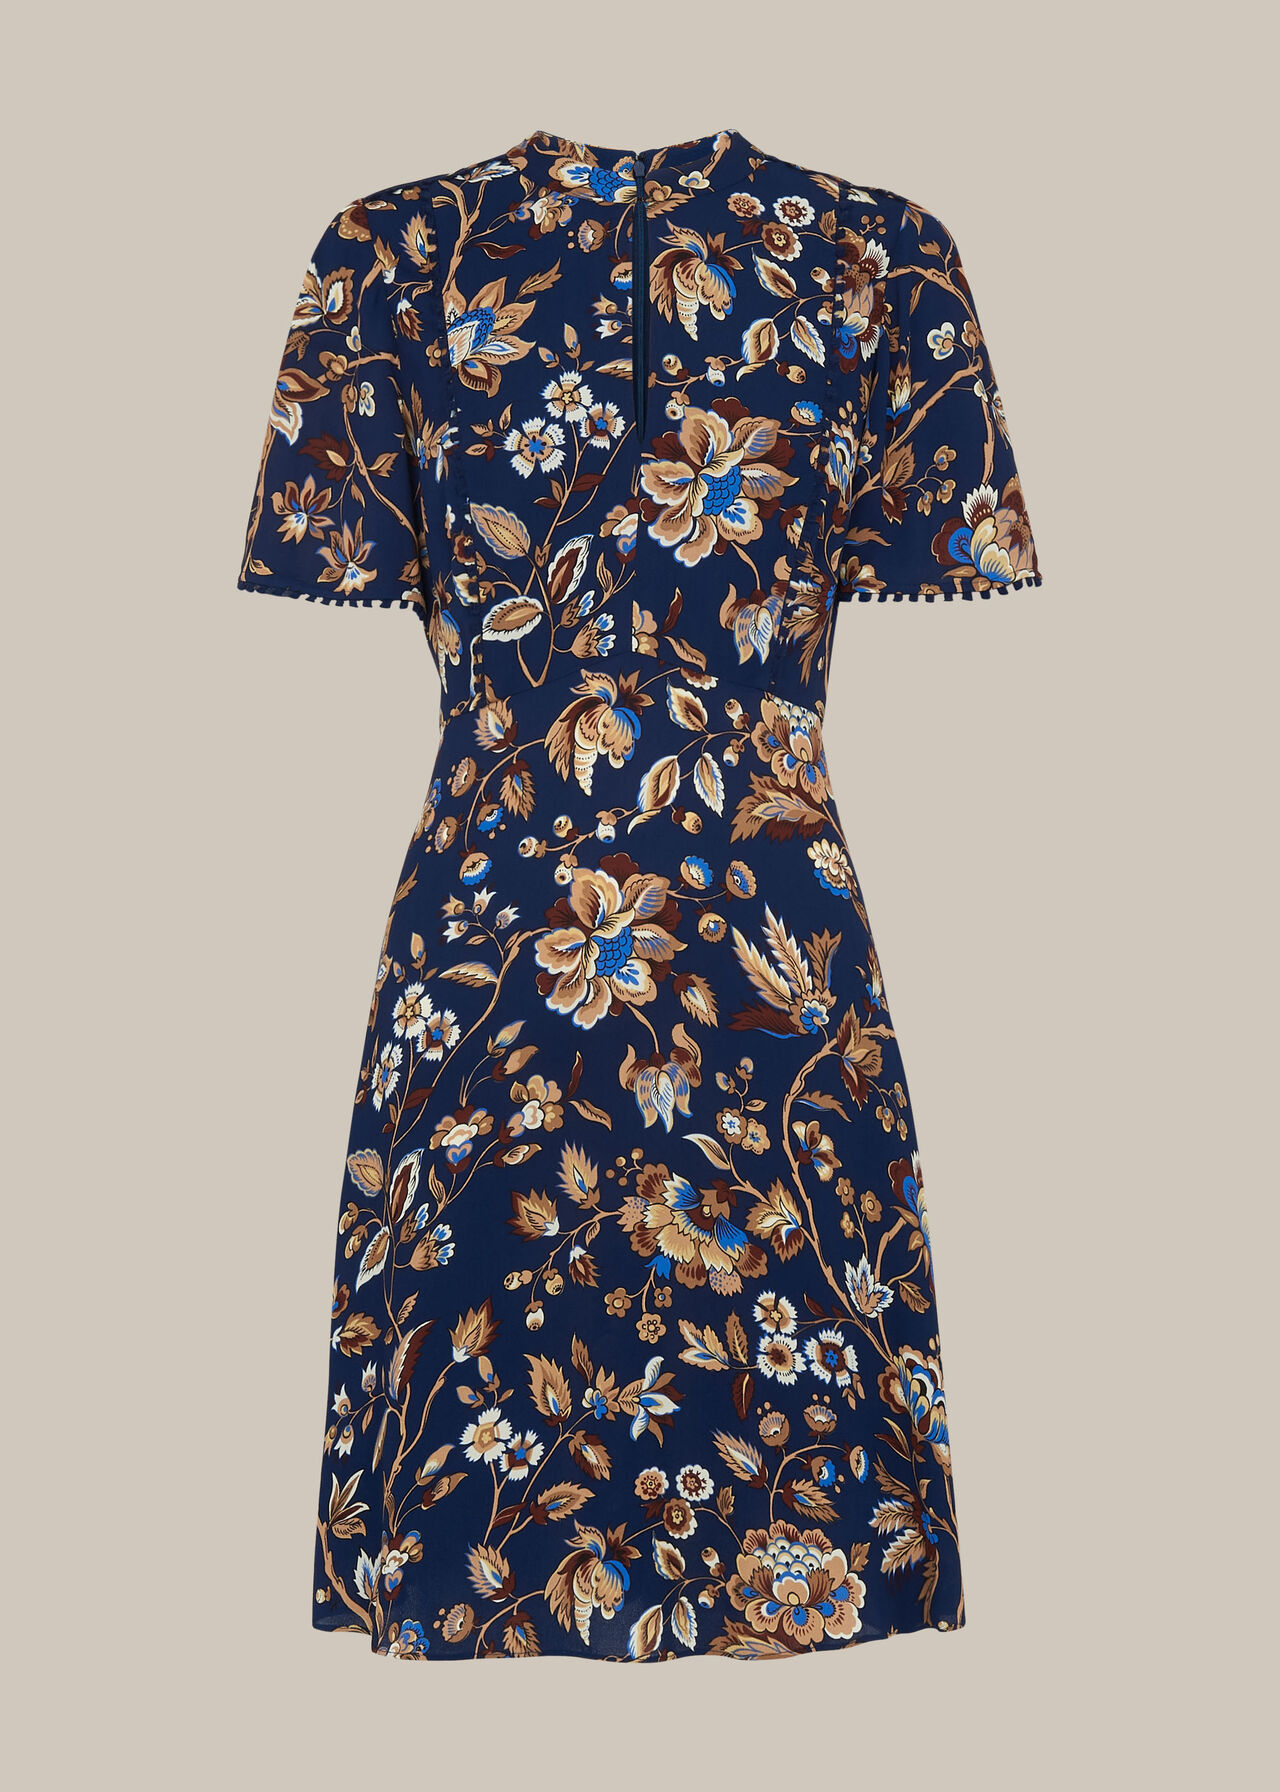 Prairie Blossom Print Dress Blue/Multi